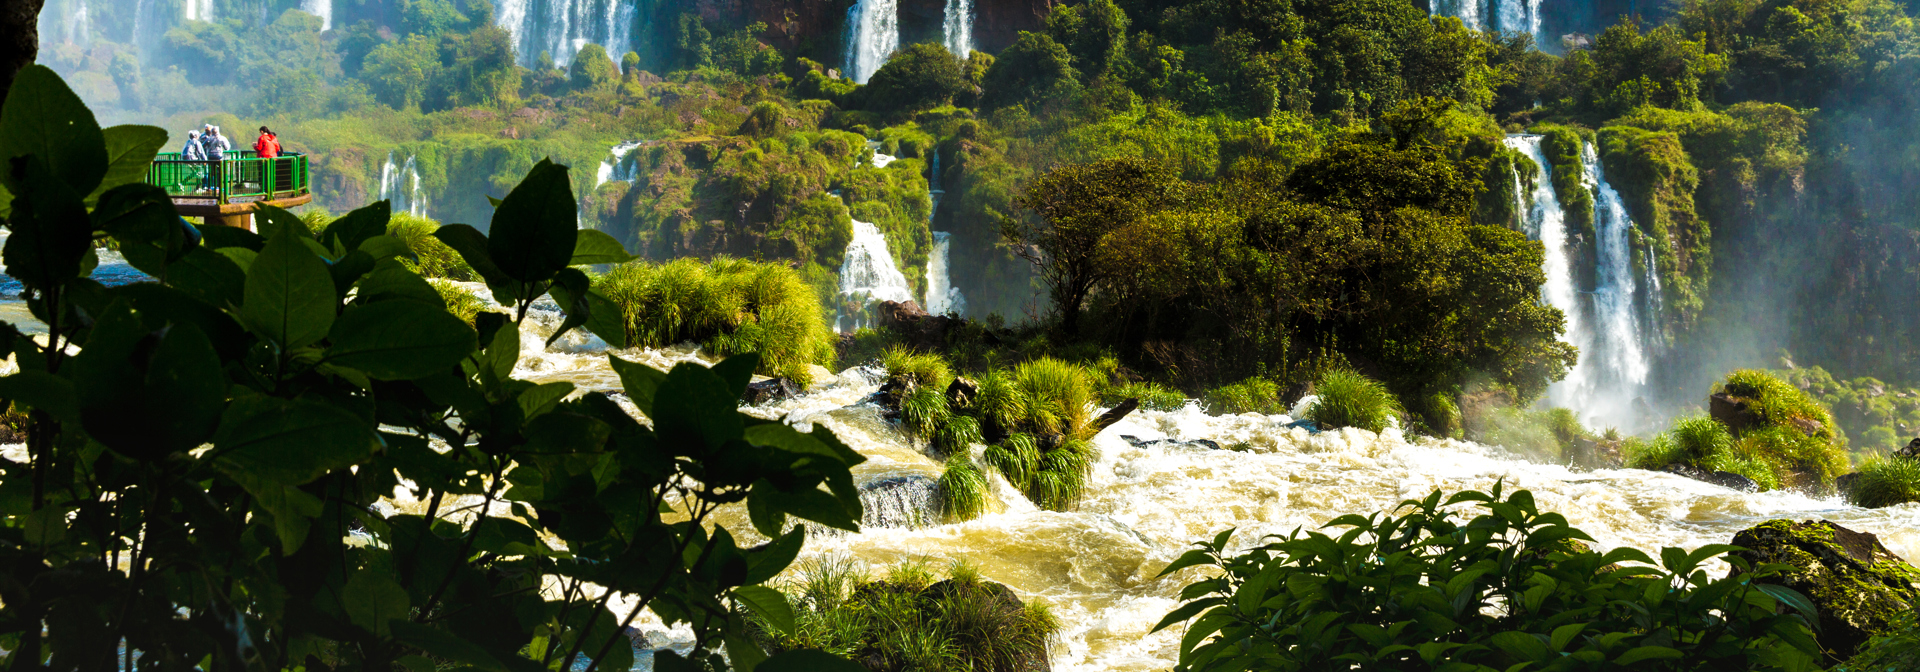 argentina - puerto iguazu_waterfall_01